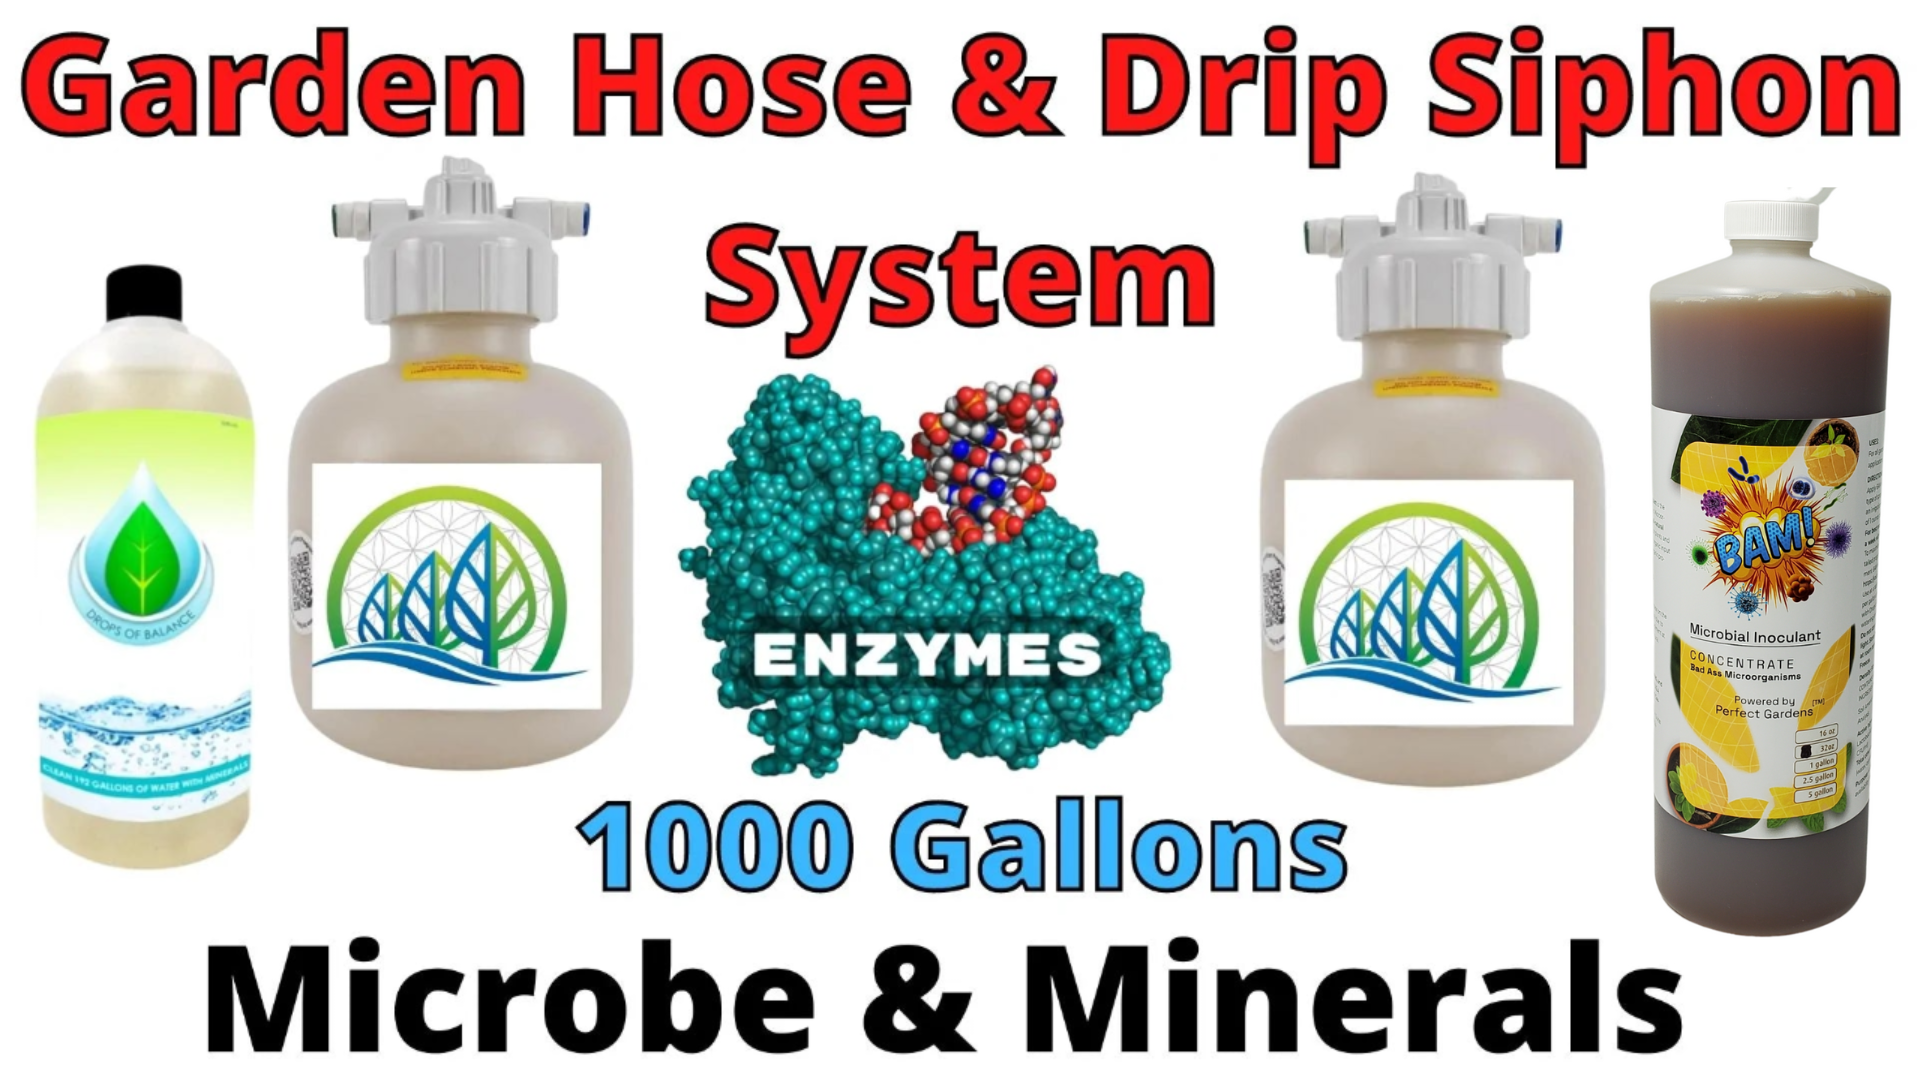 Garden Hose & Drip Siphon Enzymatic Production System